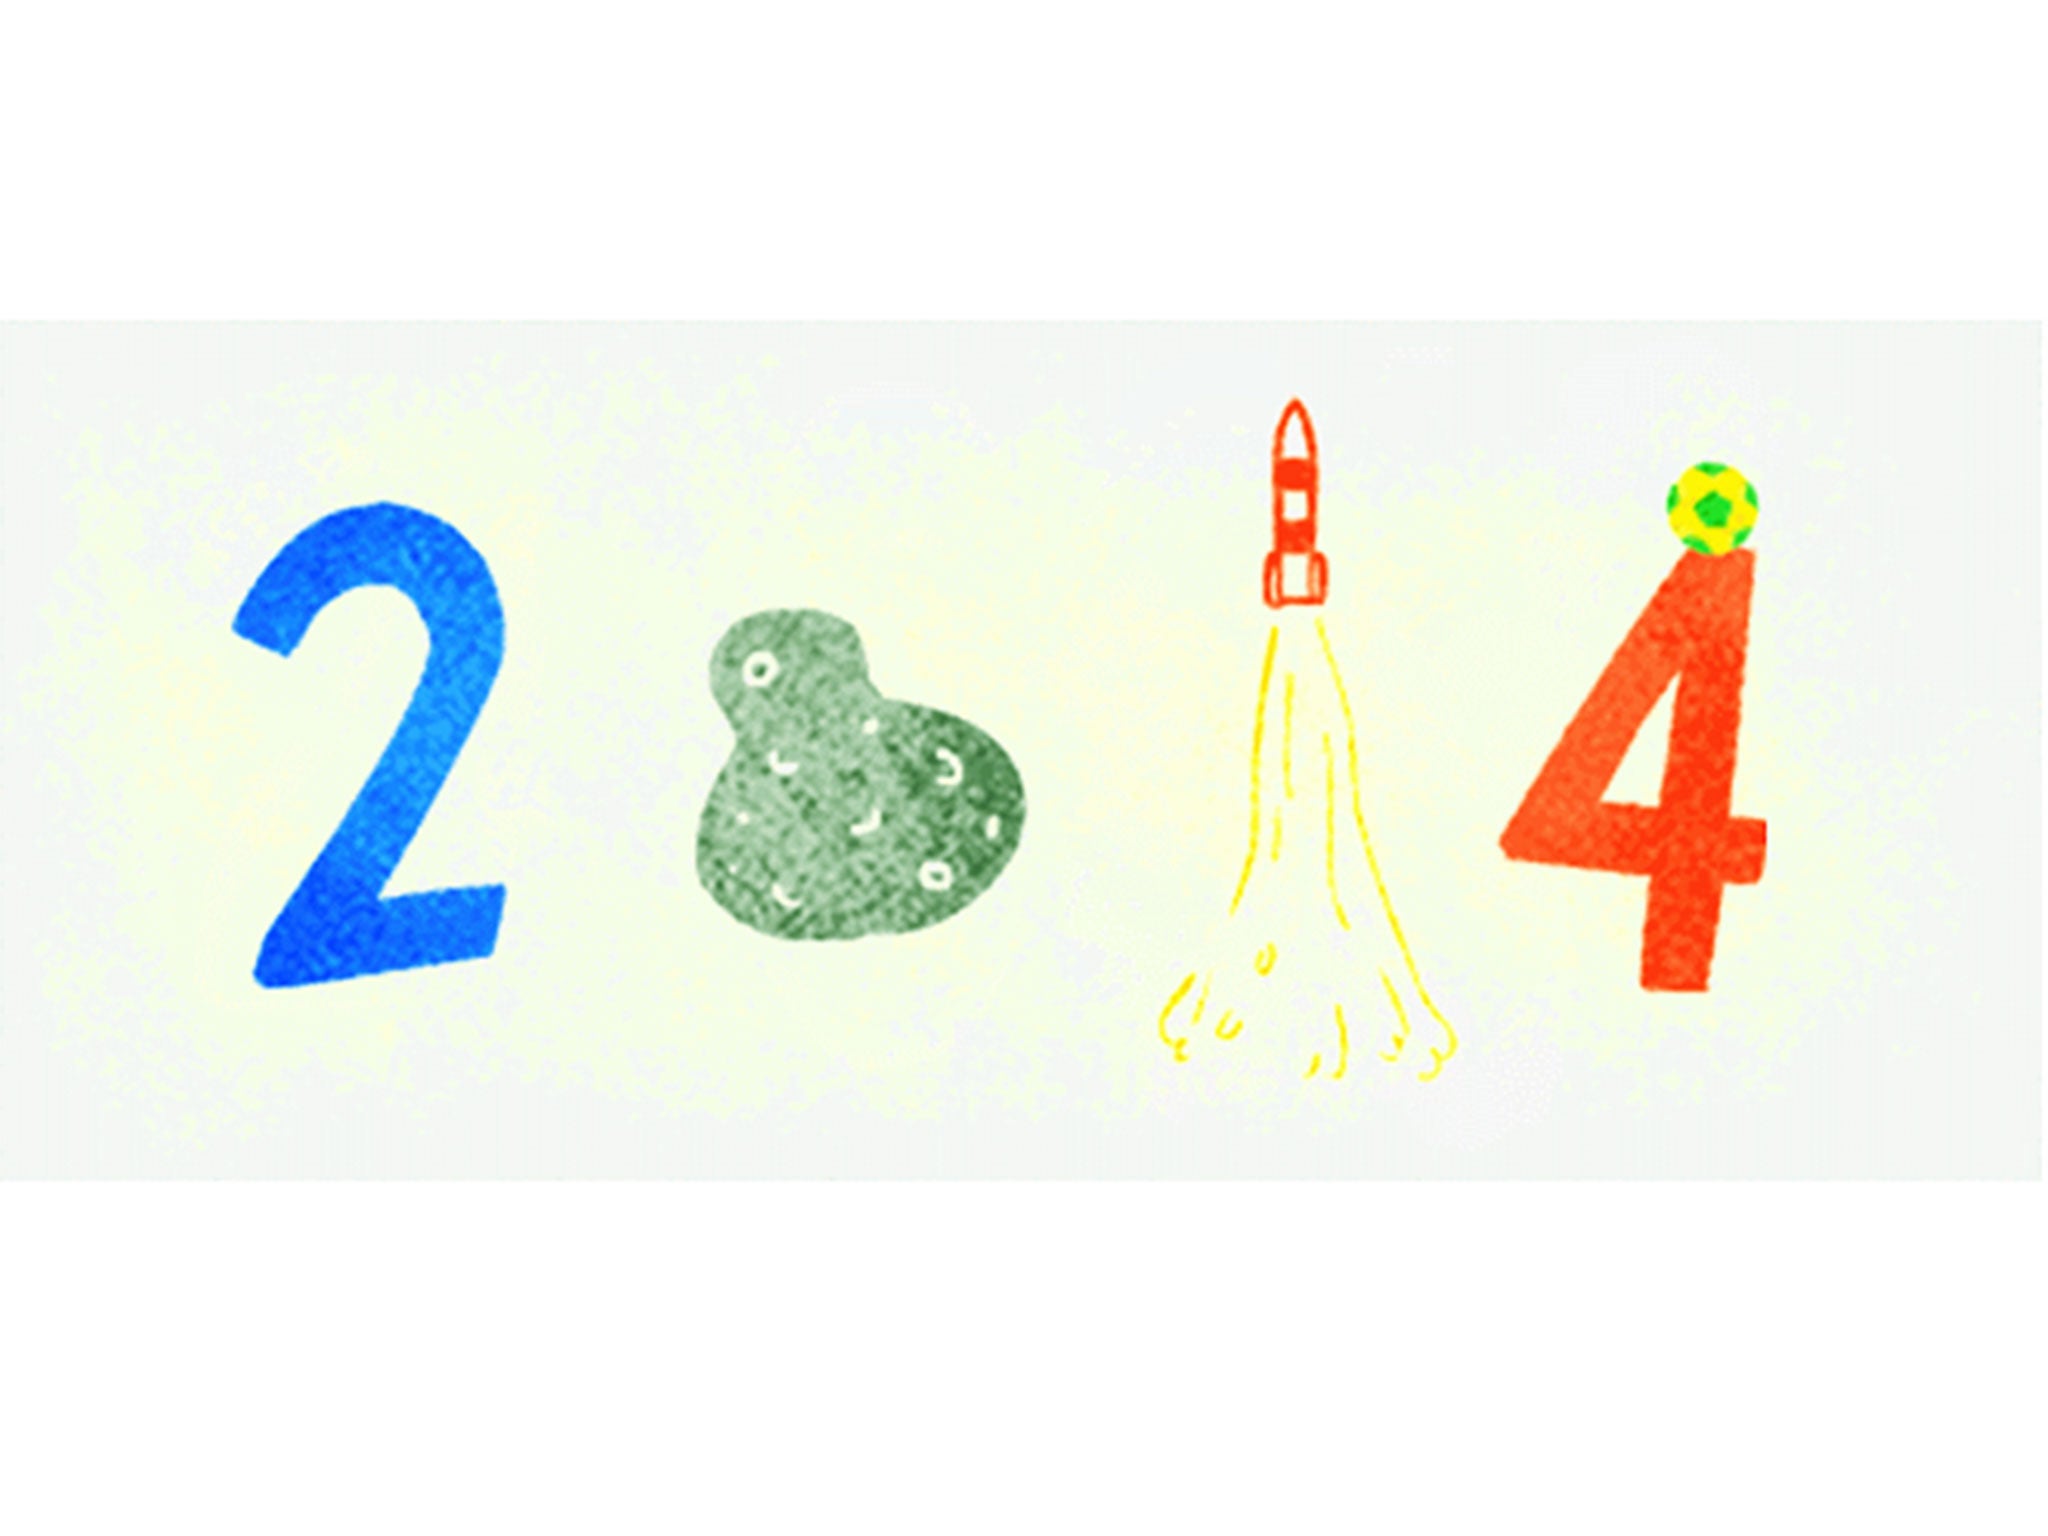 Google's Doodle celebrating the end of 2014